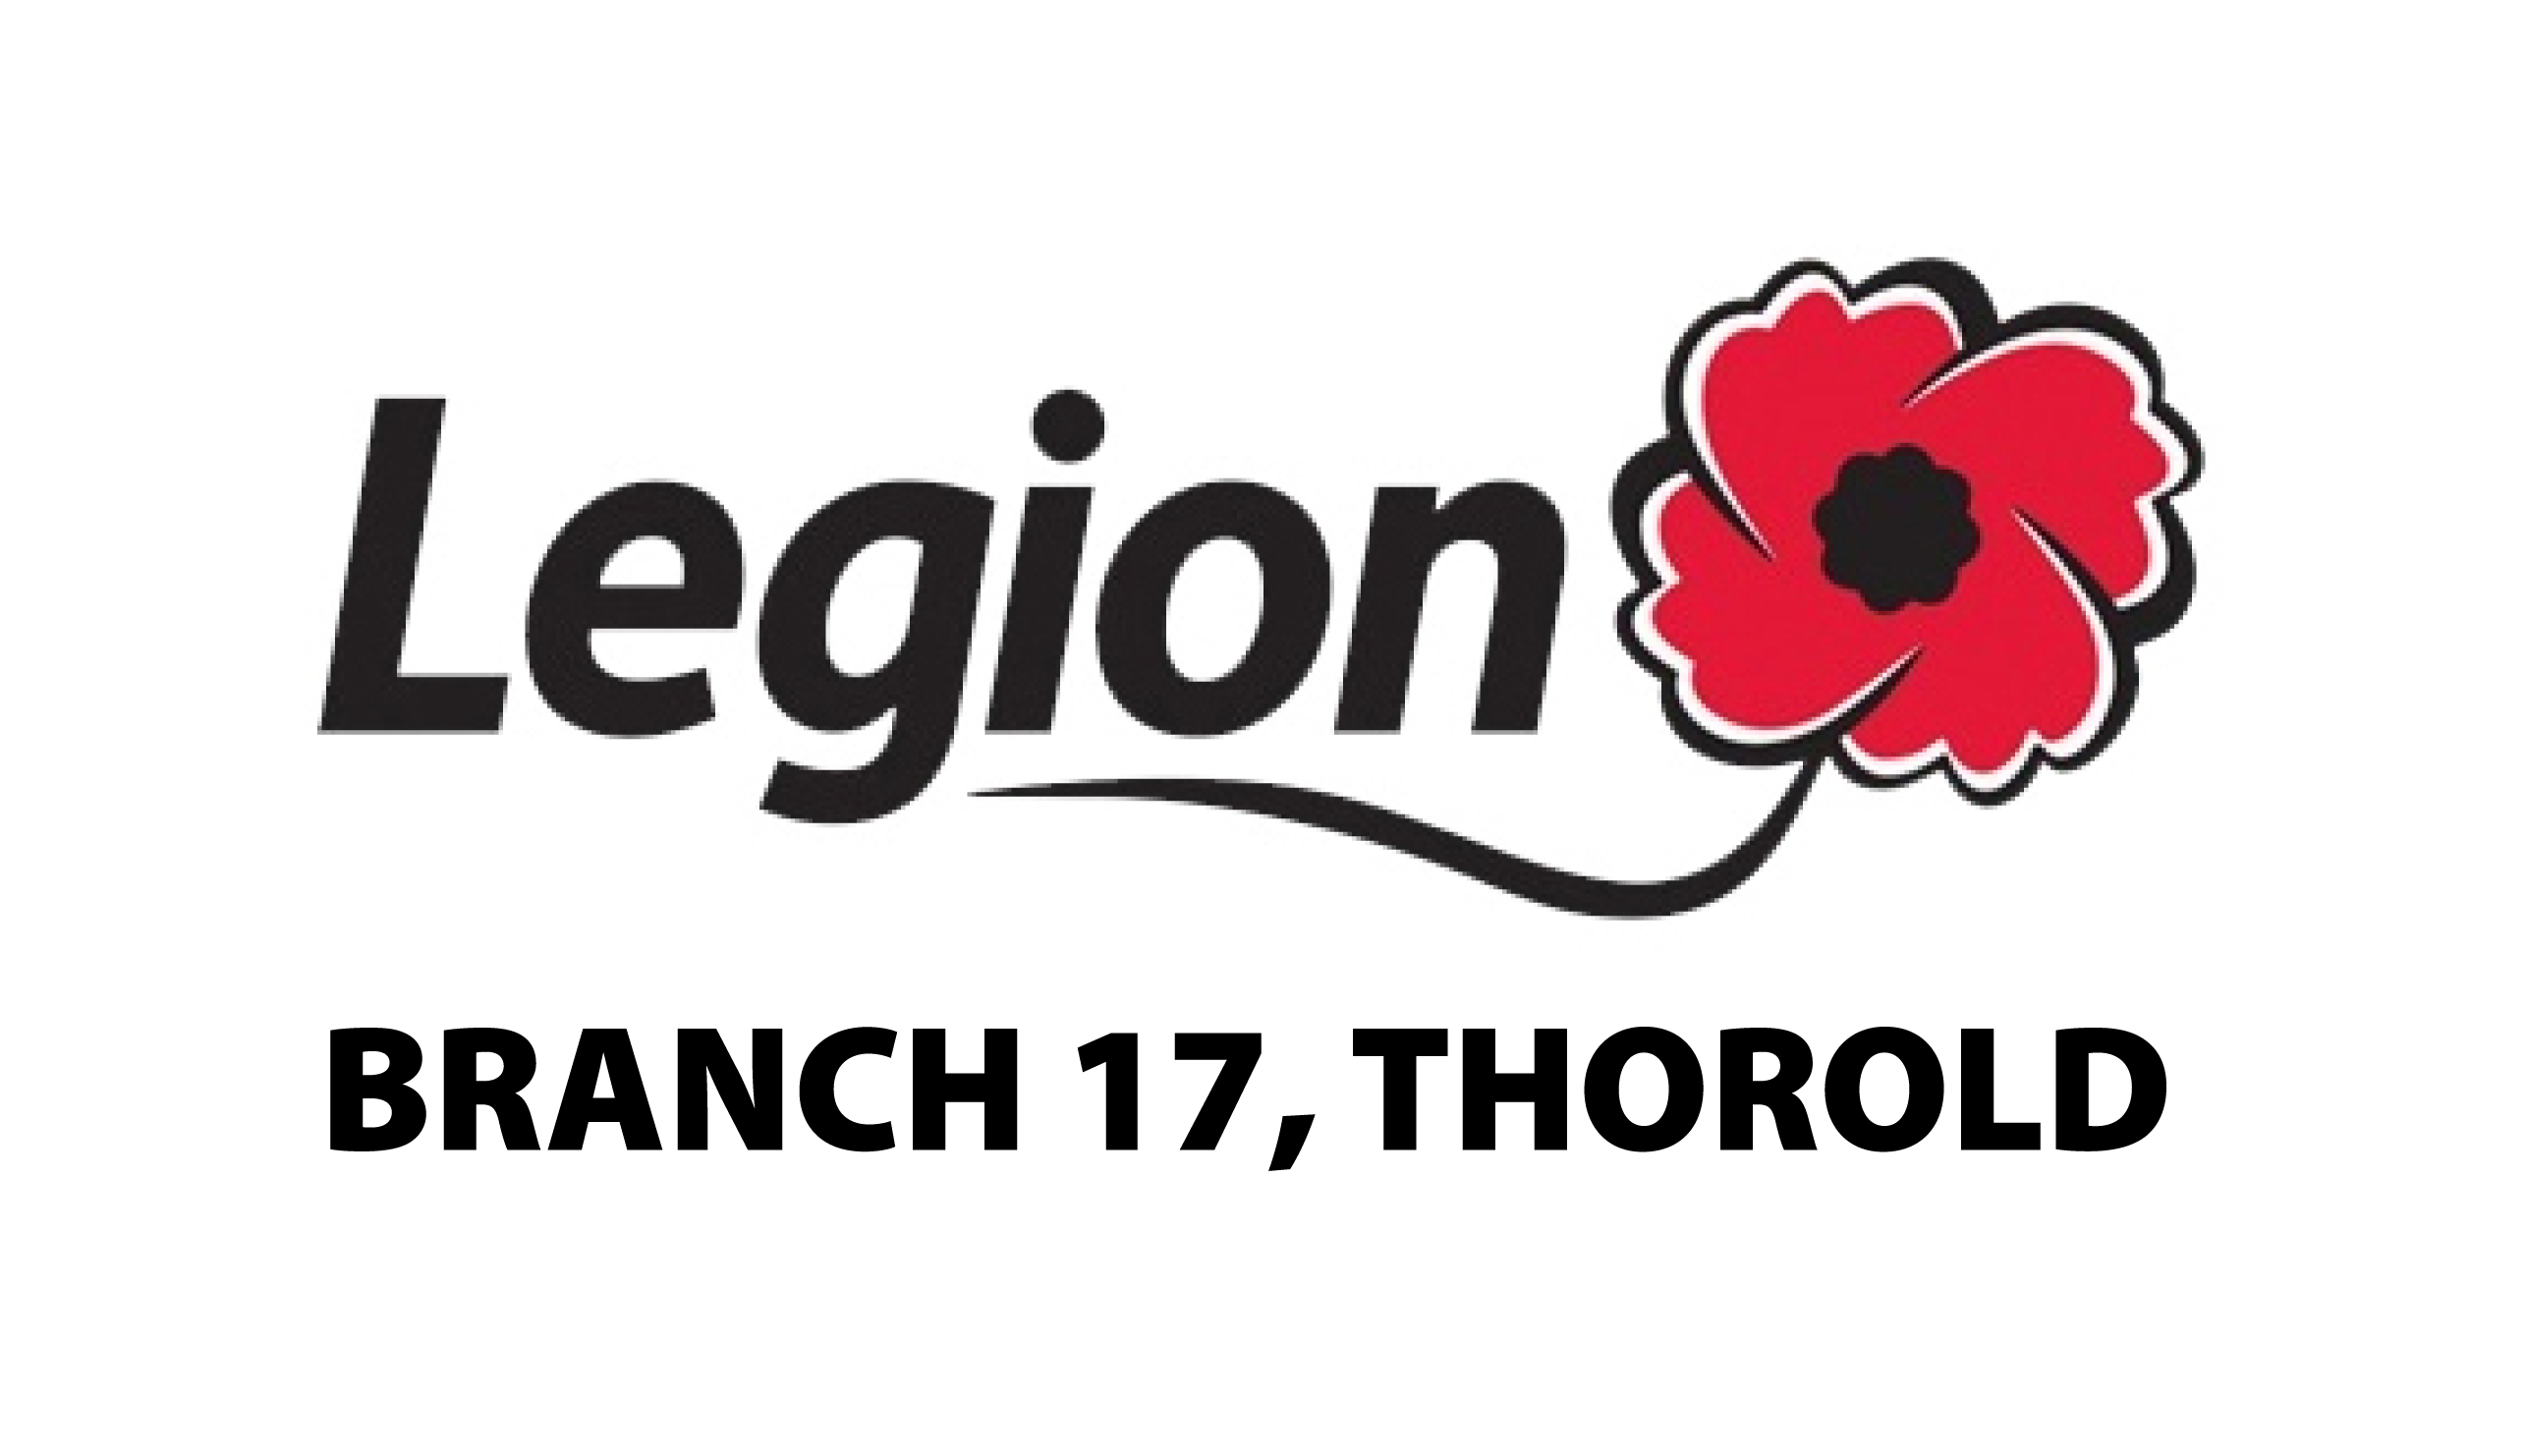 Thorold Legion - Brand 17